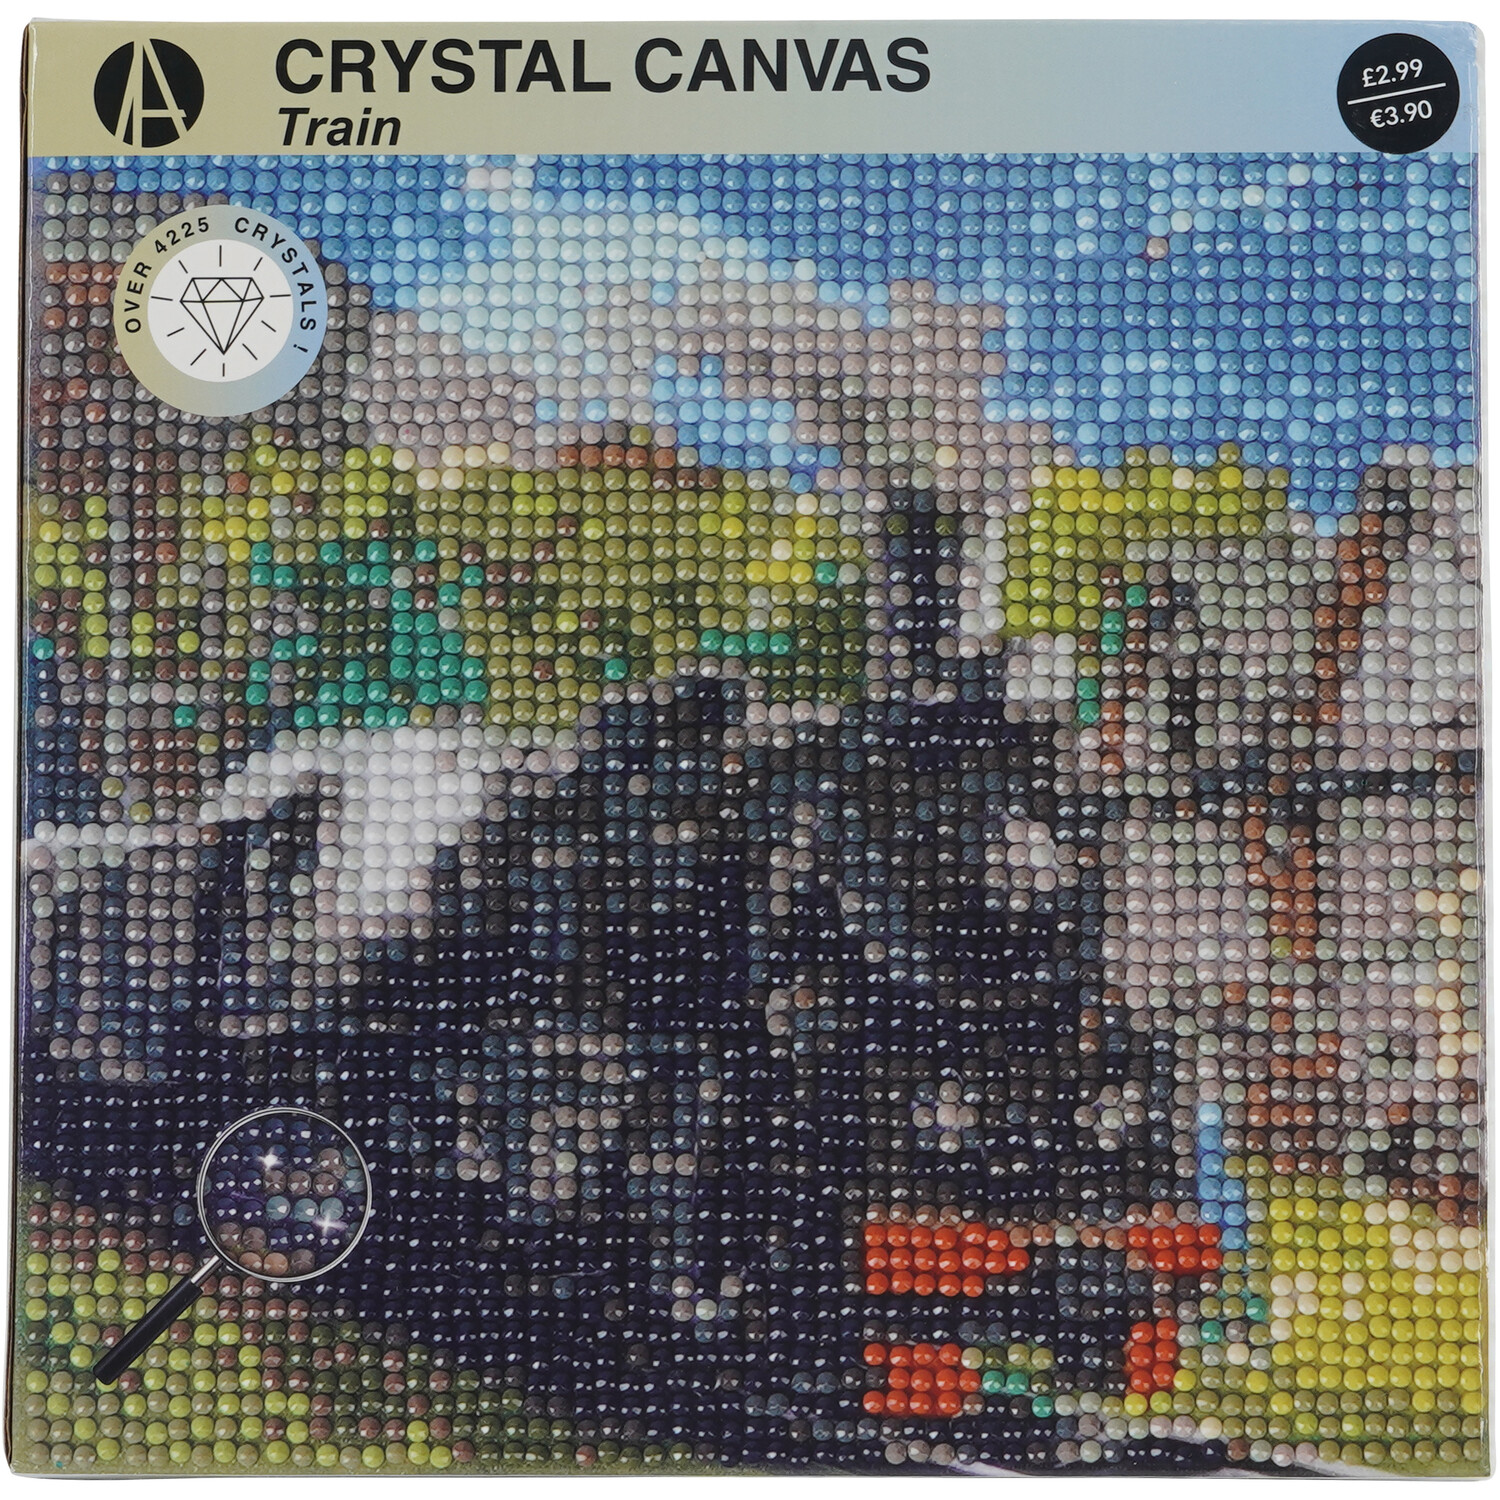 Crystal Canvas Bike or Train Image 1